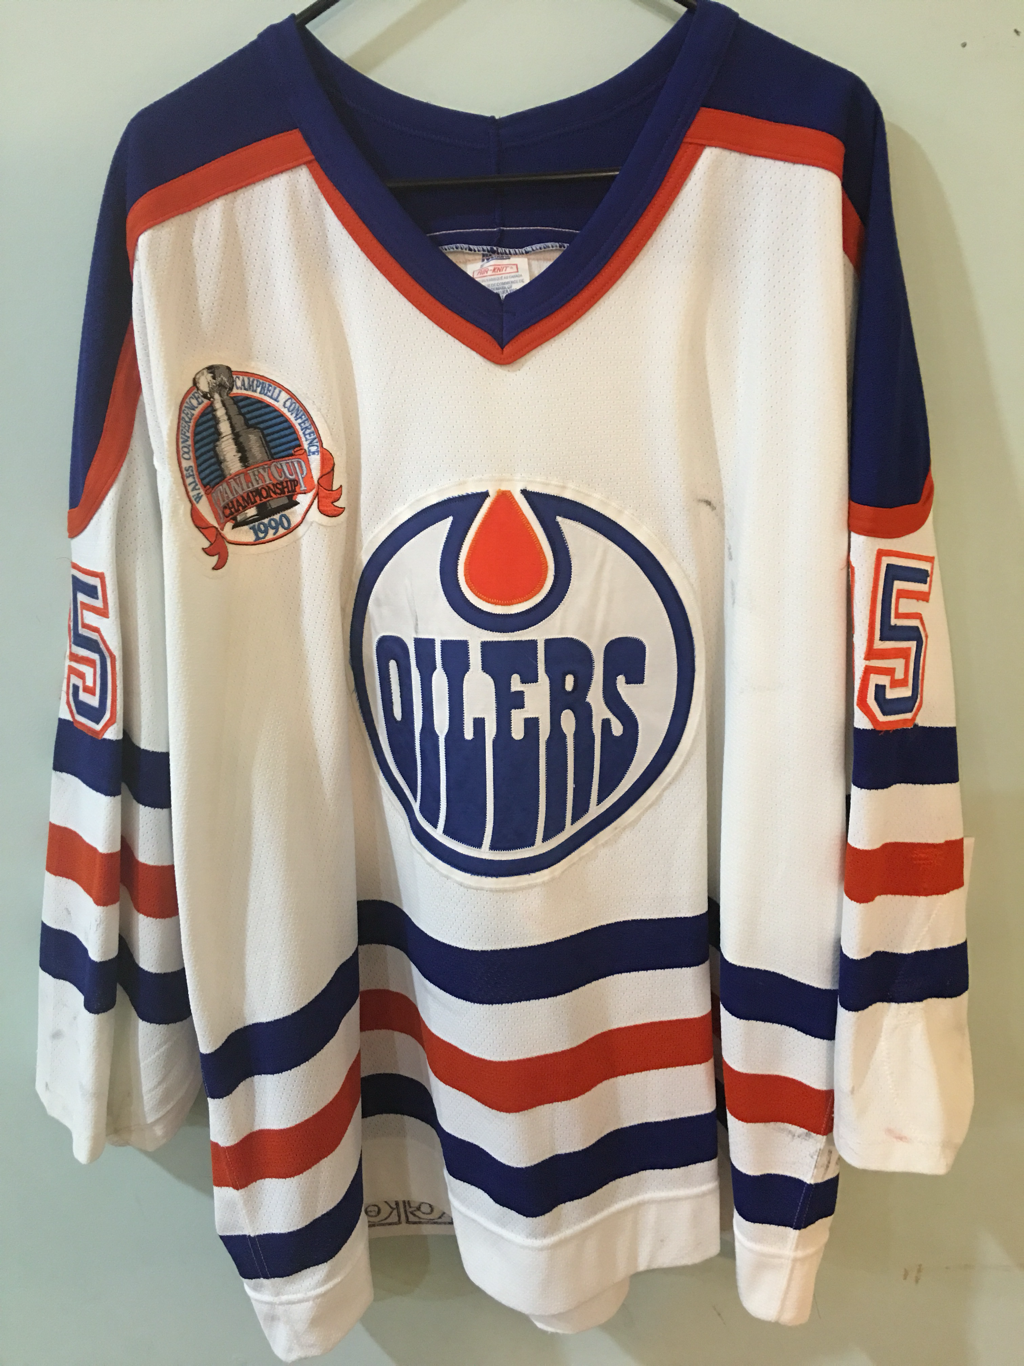 2005-06 Chris Pronger Edmonton Oilers Game Worn Jersey - Photo